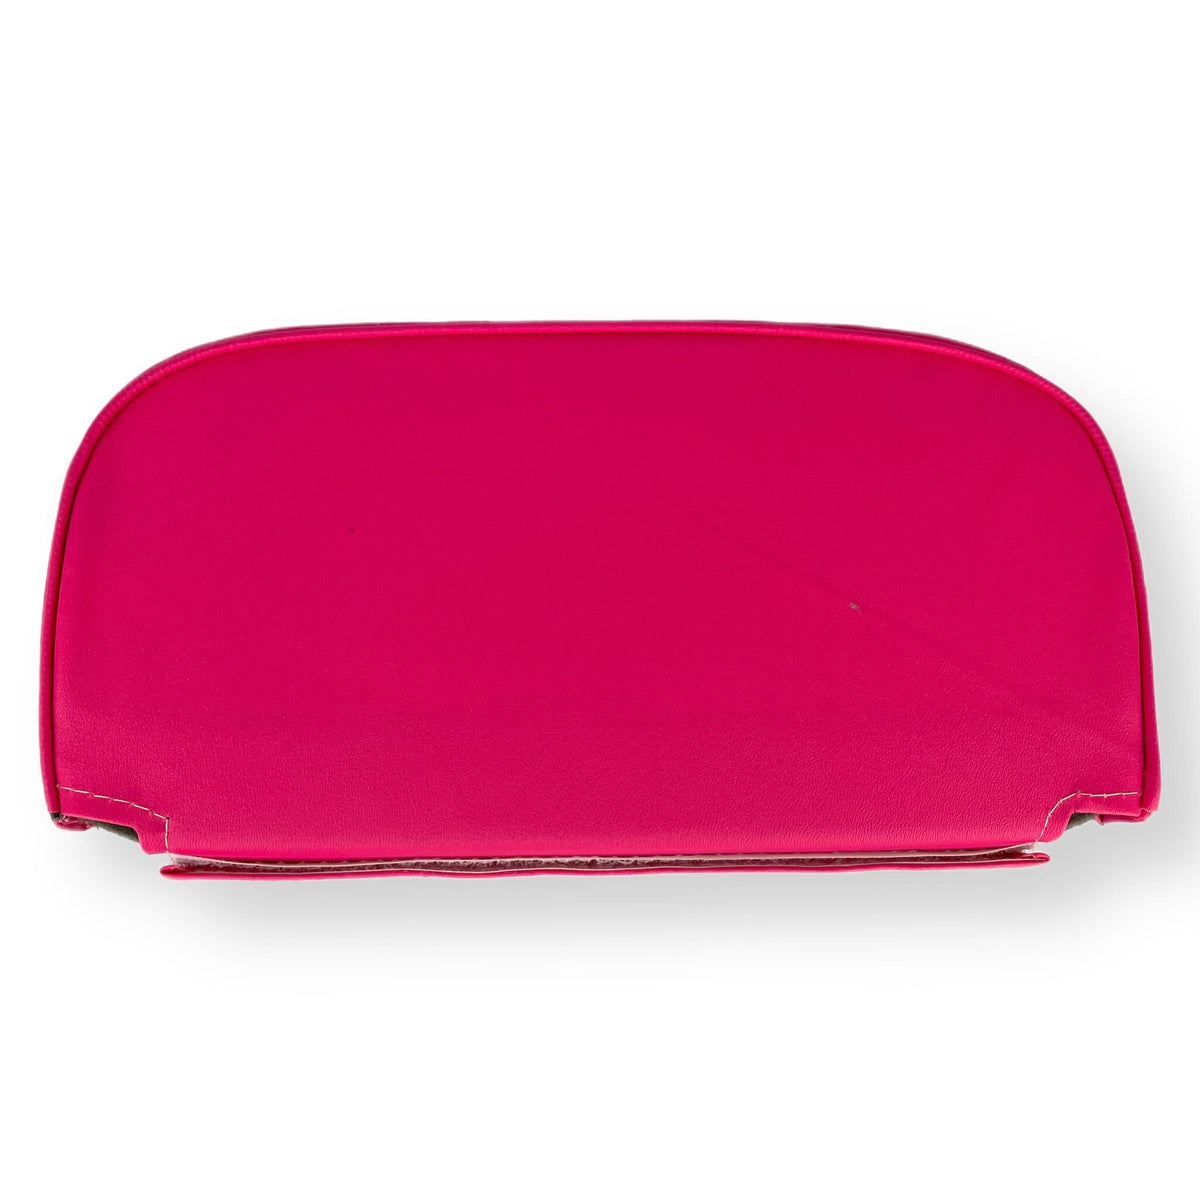 Vespa Lambretta Cuppini Carrier Backrest - Replacement Pad - Hot Pink